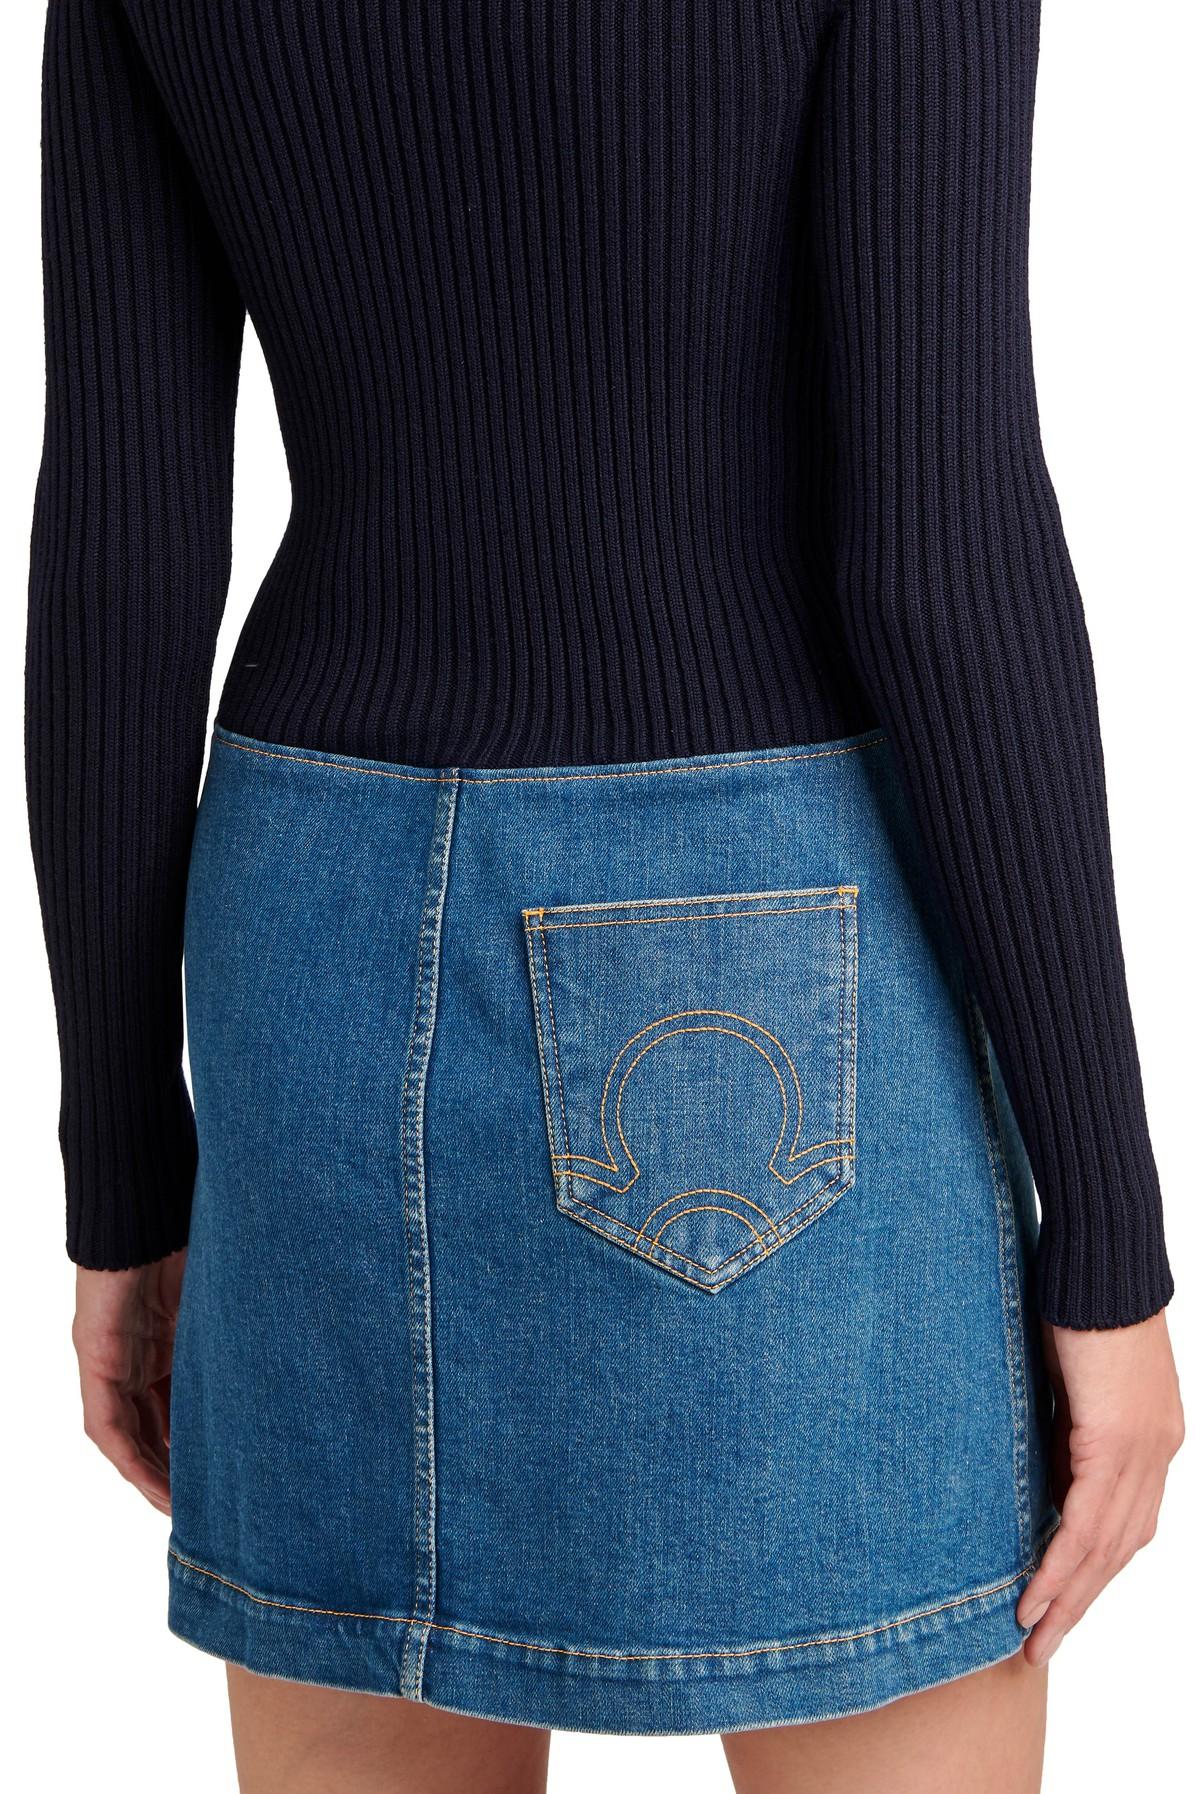 Louis Vuitton - Authenticated Skirt - Denim - Jeans Blue Plain for Women, Very Good Condition